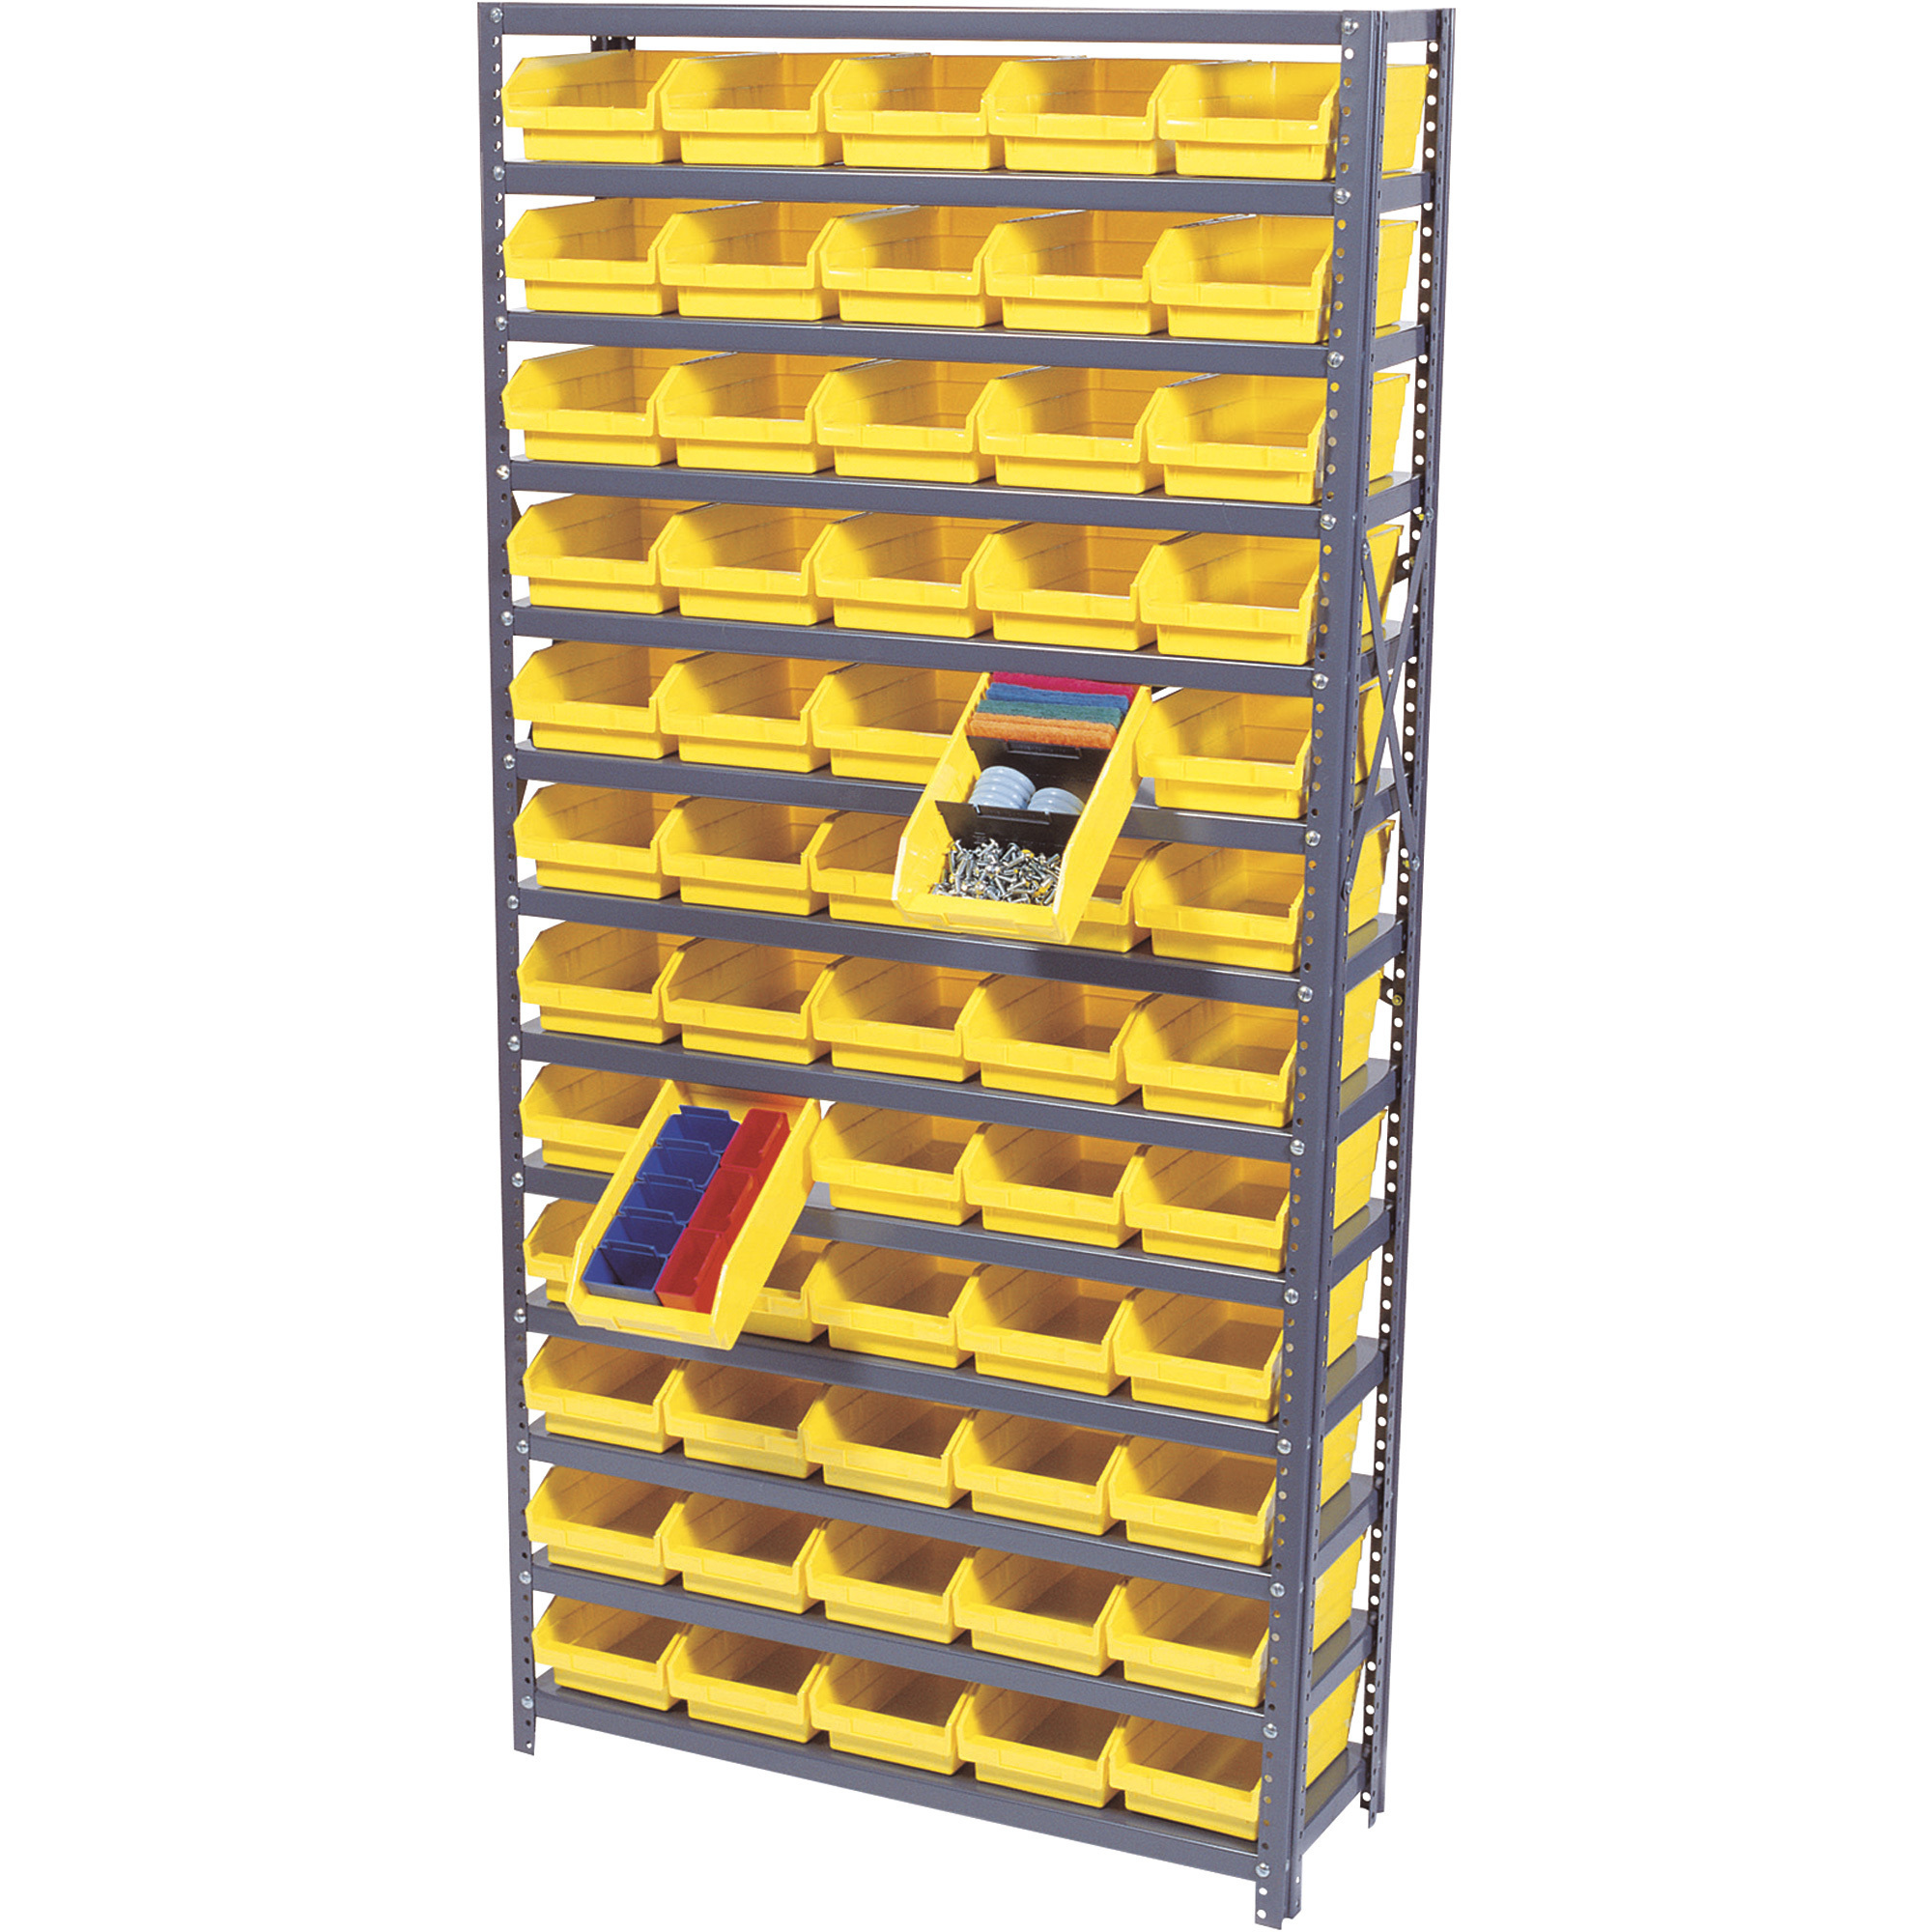 Quantum Storage Single Side Metal Shelving Unit With 60 Bins, 18Inch x 36Inch x 75Inch Rack Size, Yellow, Model 1875-104YL